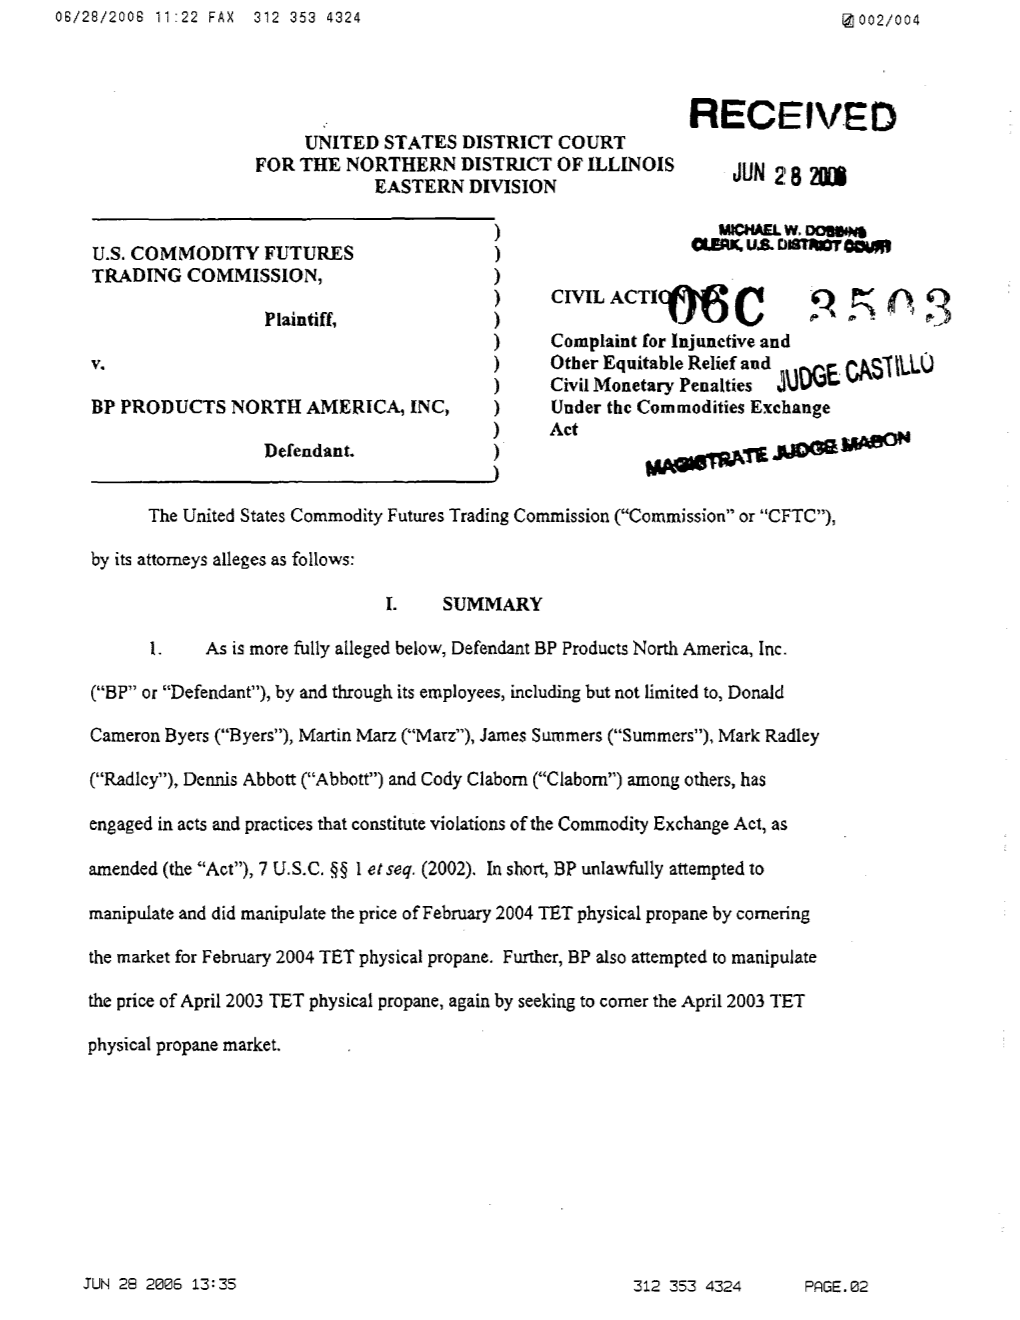 CFTC V. BP Products North America, Inc.: Complaint